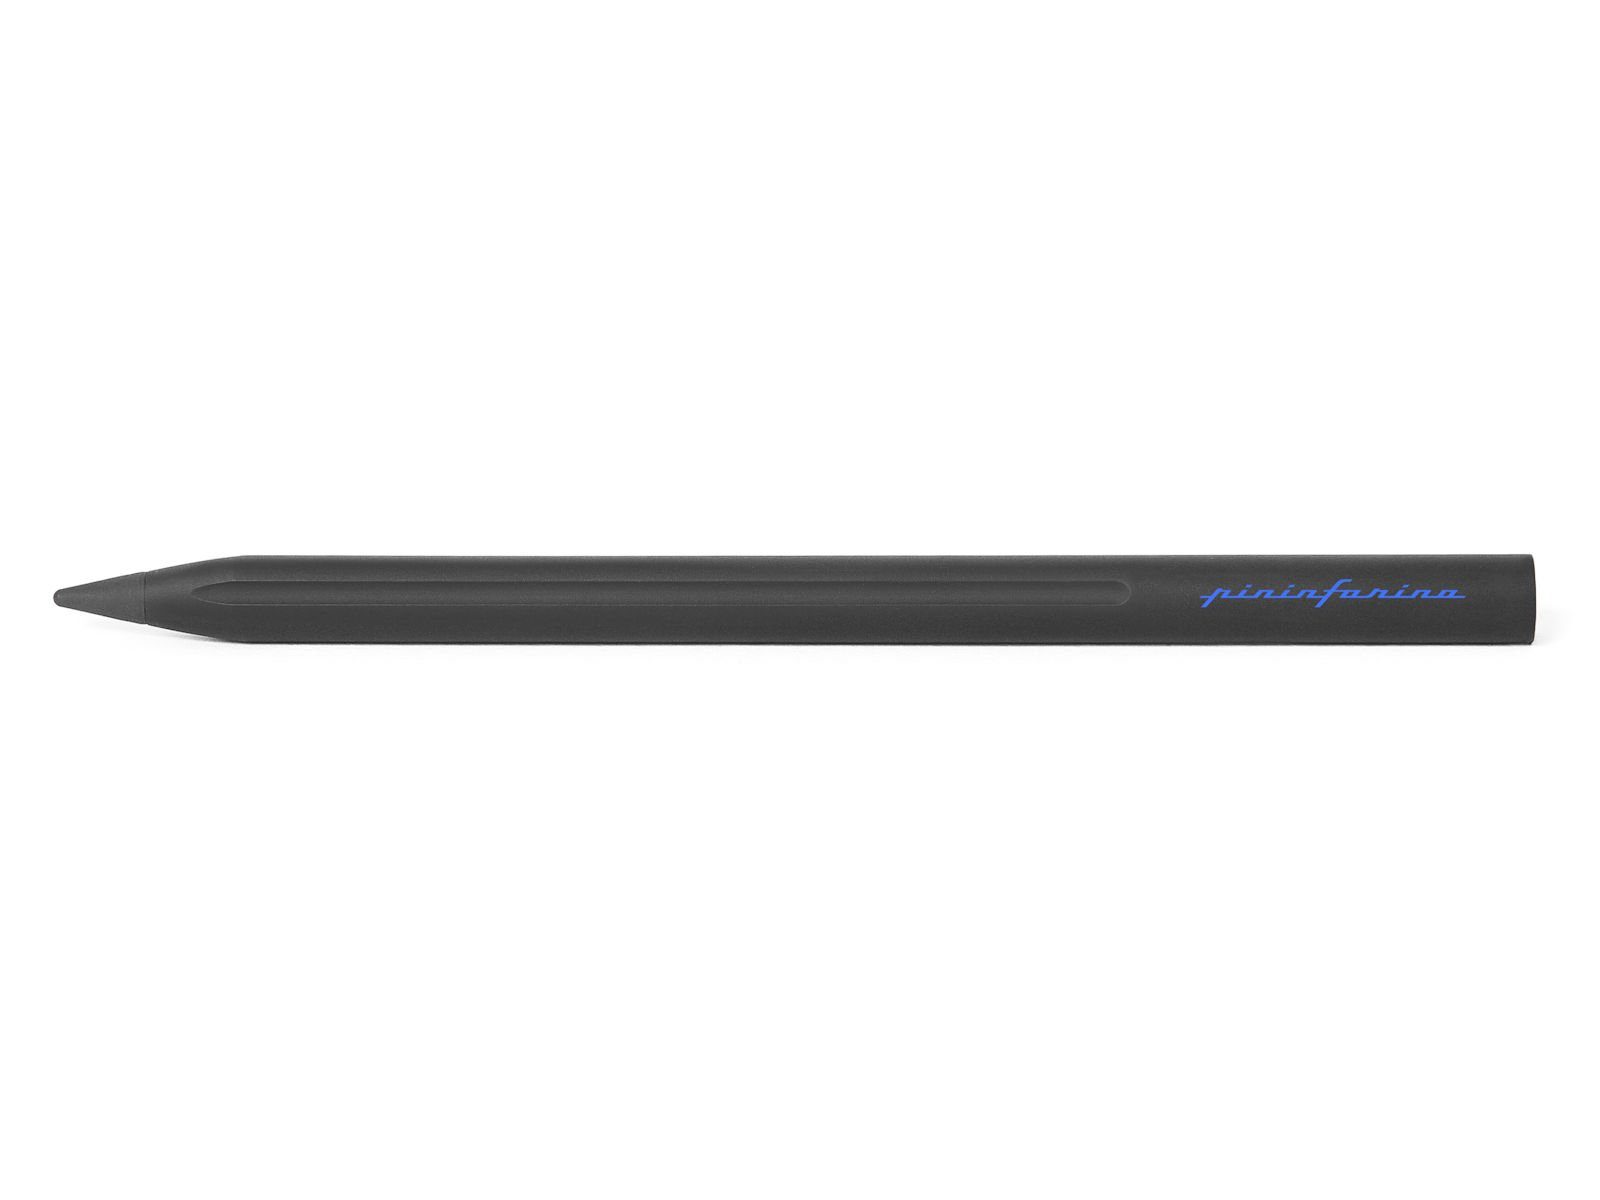 Pininfarina Bleistift Bleistift Grafeex Pininfarina Smart Pencil Bleier Schreibgerät 4 Farbe, (kein Set) Blau